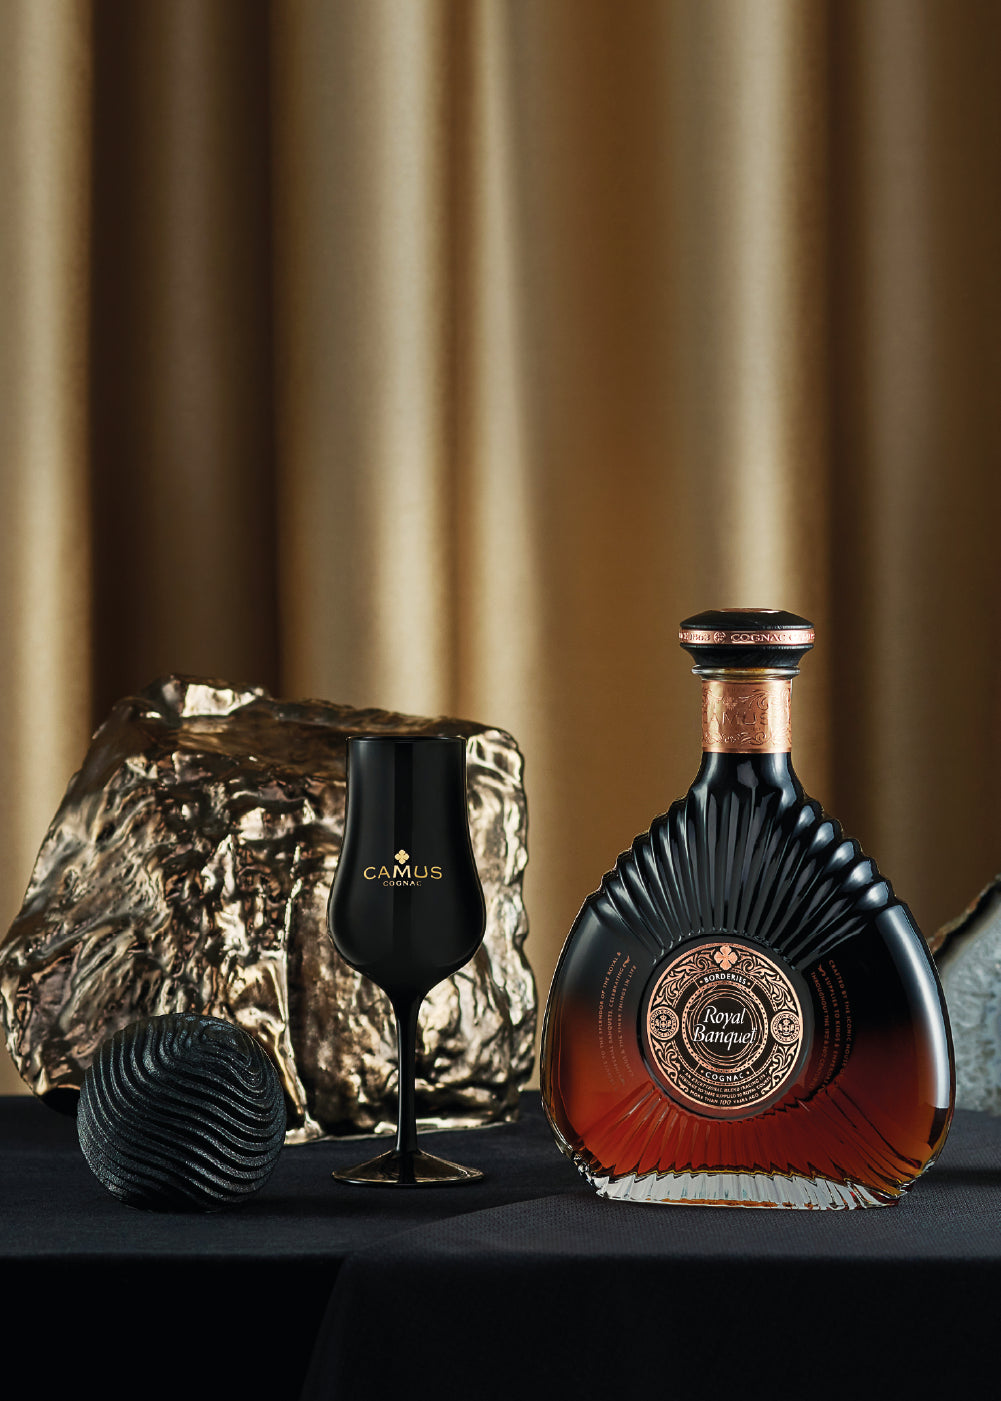 Camus Cognac - Made to Measure Luxury Cognac - Independent Since